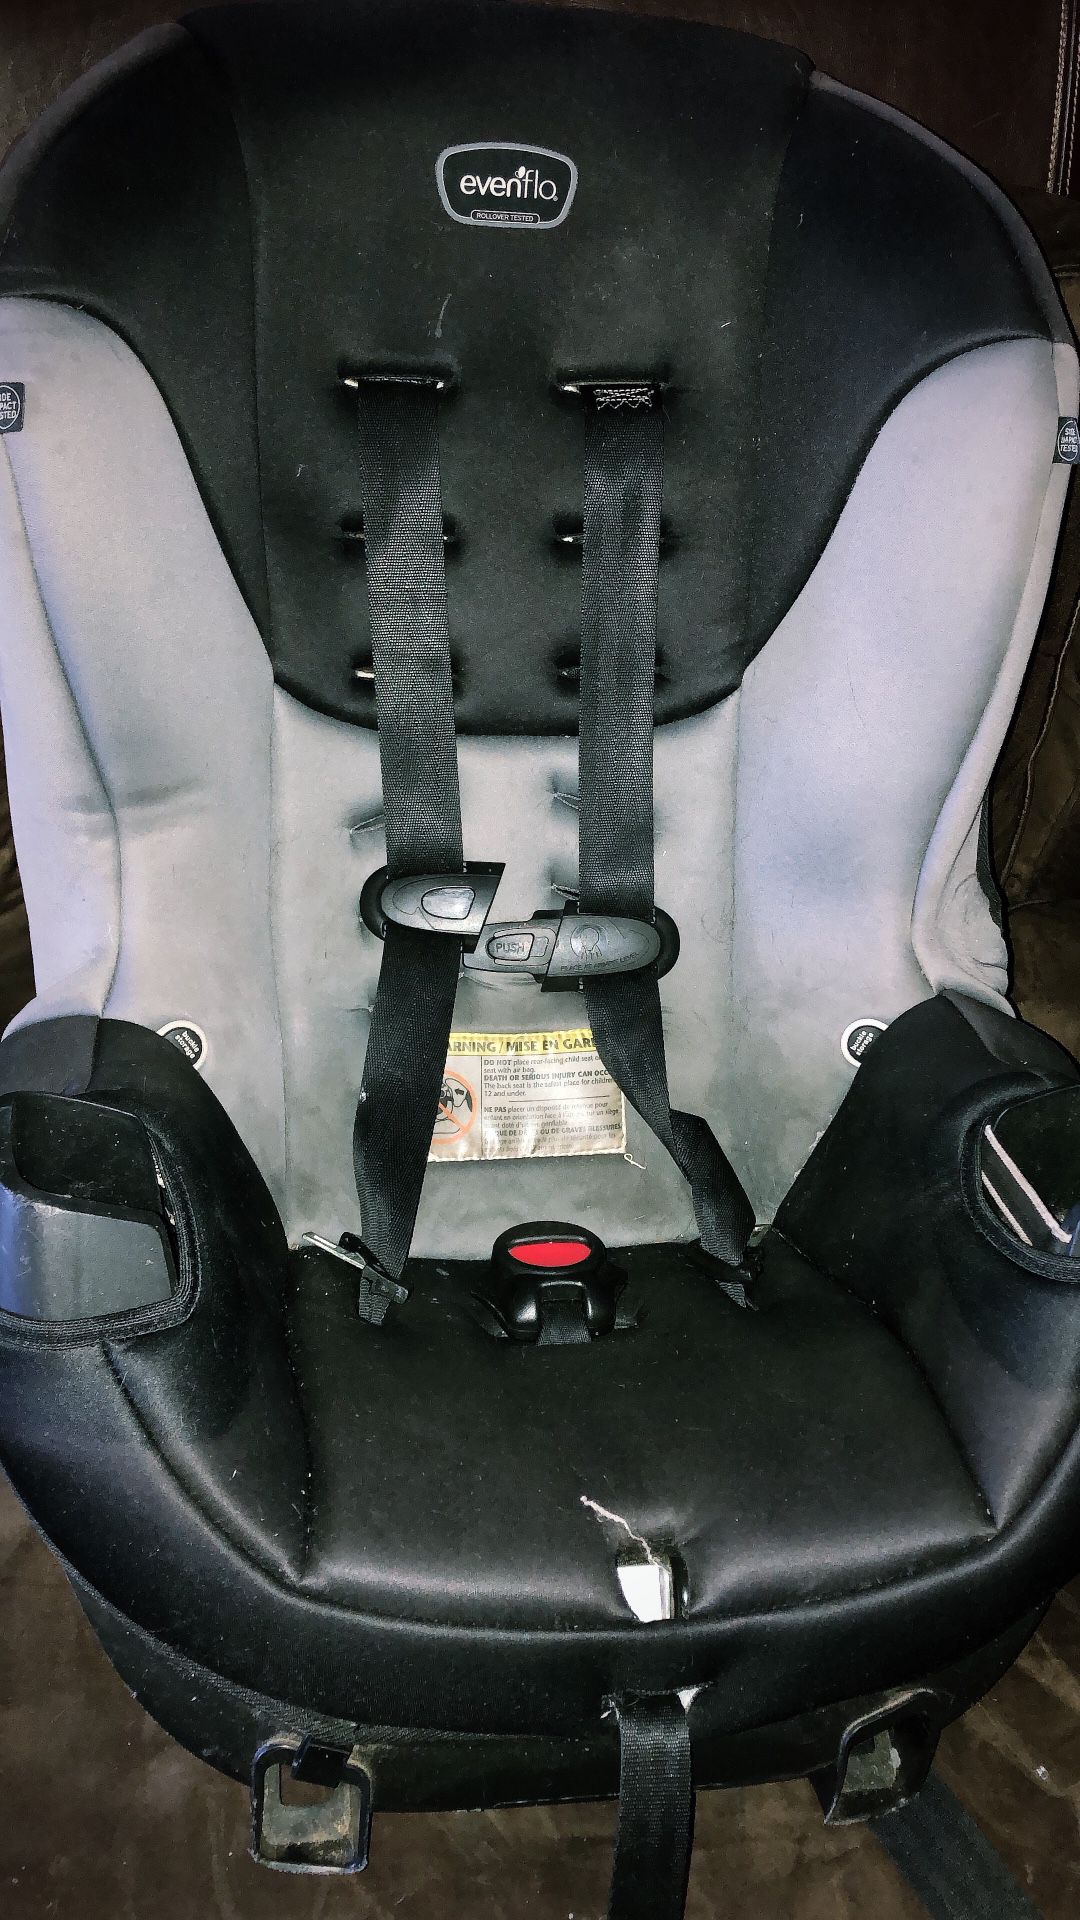 Evenflow car seat